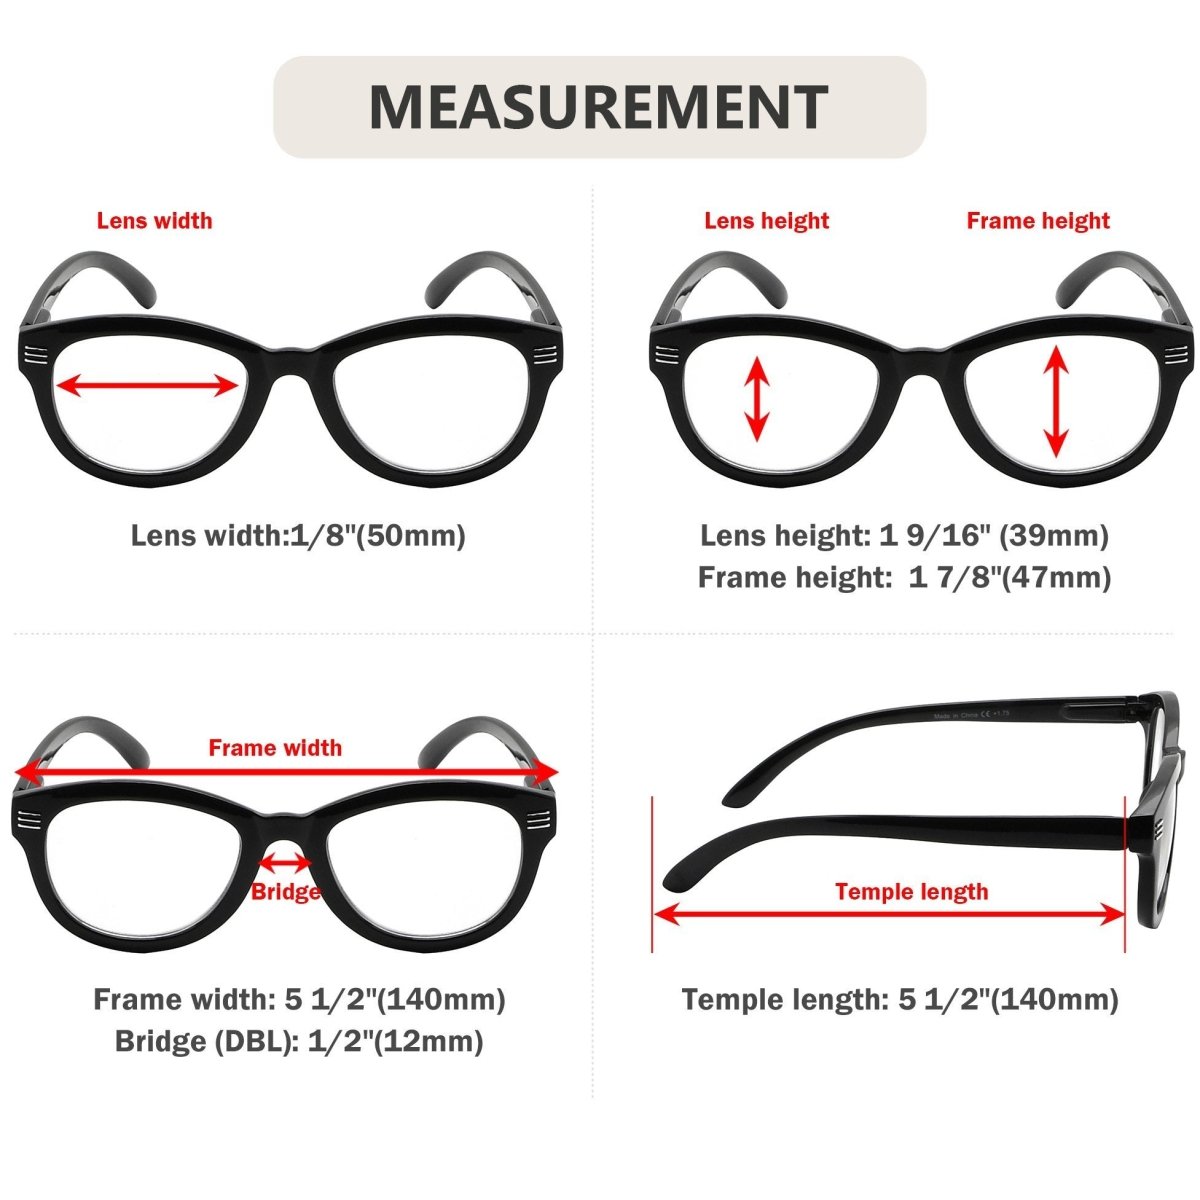 5 Pack Stylish Cat-eye Reading Glasses R2107